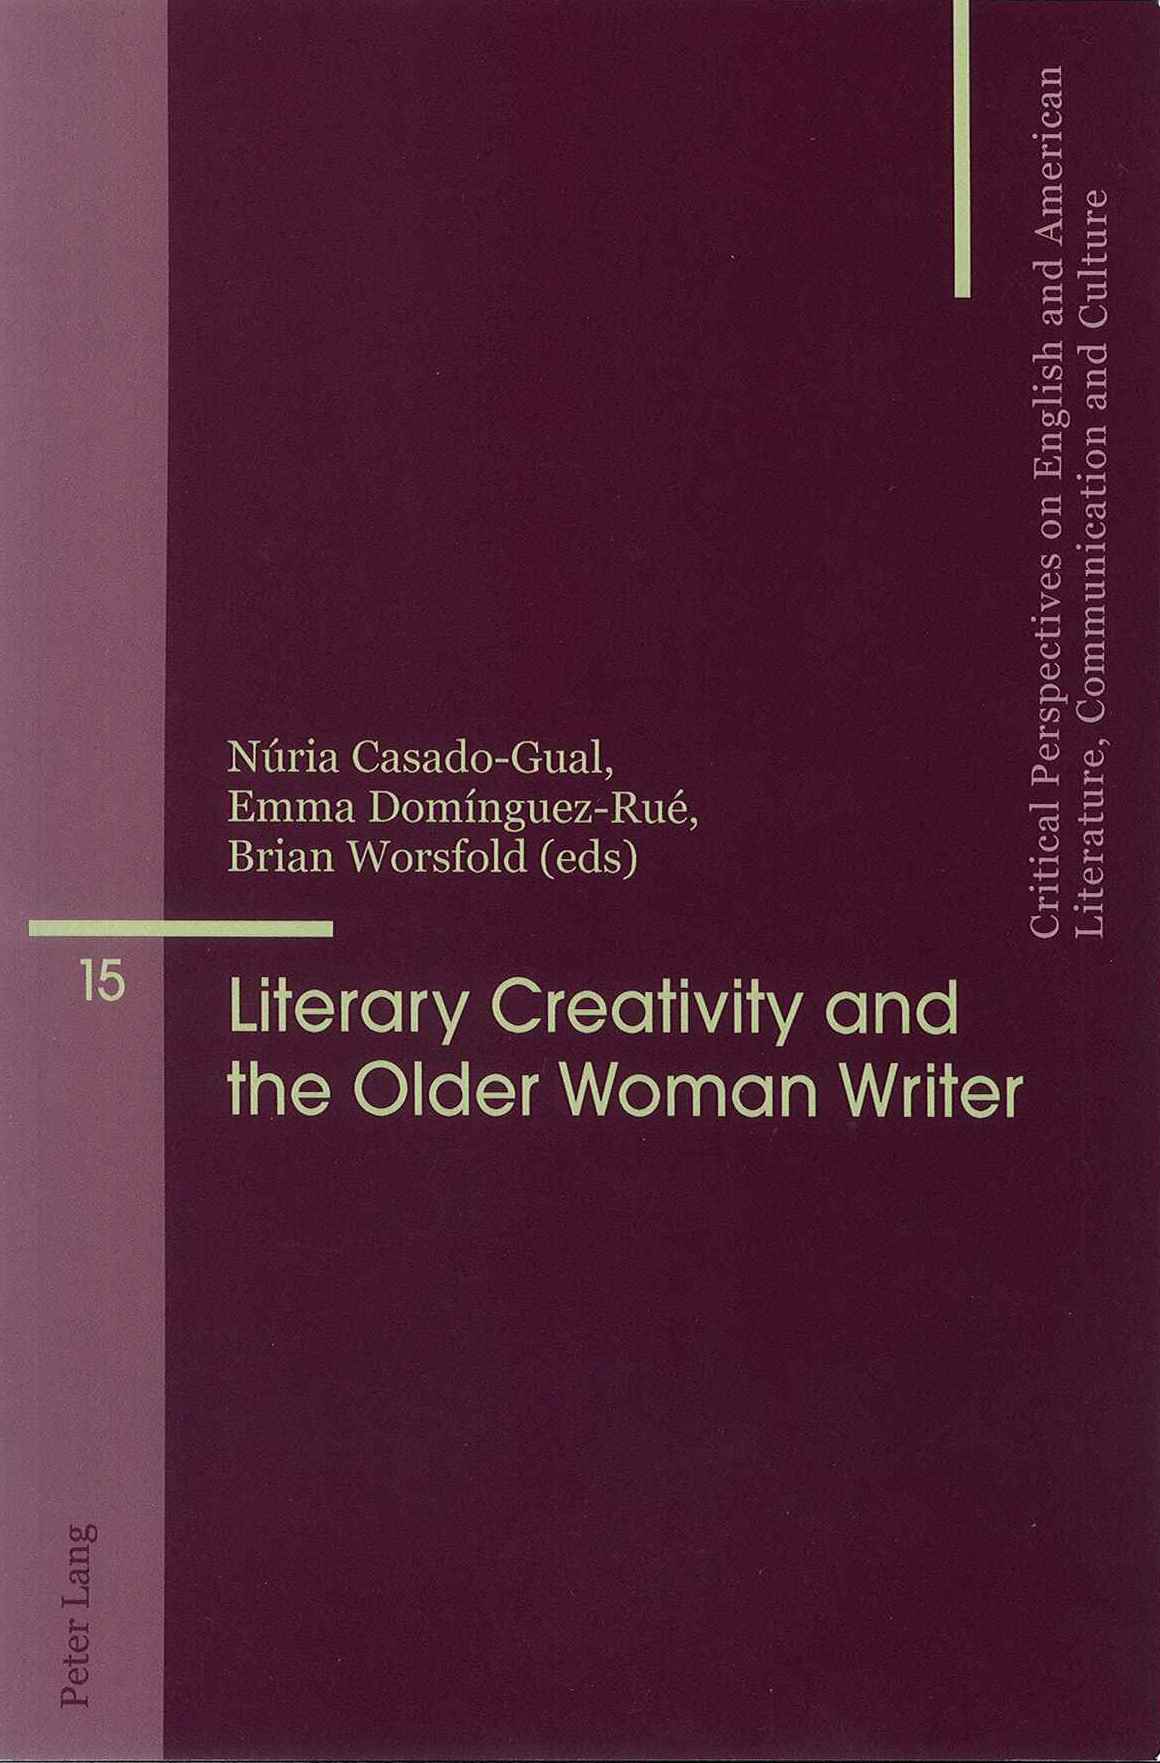 Literay_Creativity_and_the_Older_Women_Writer